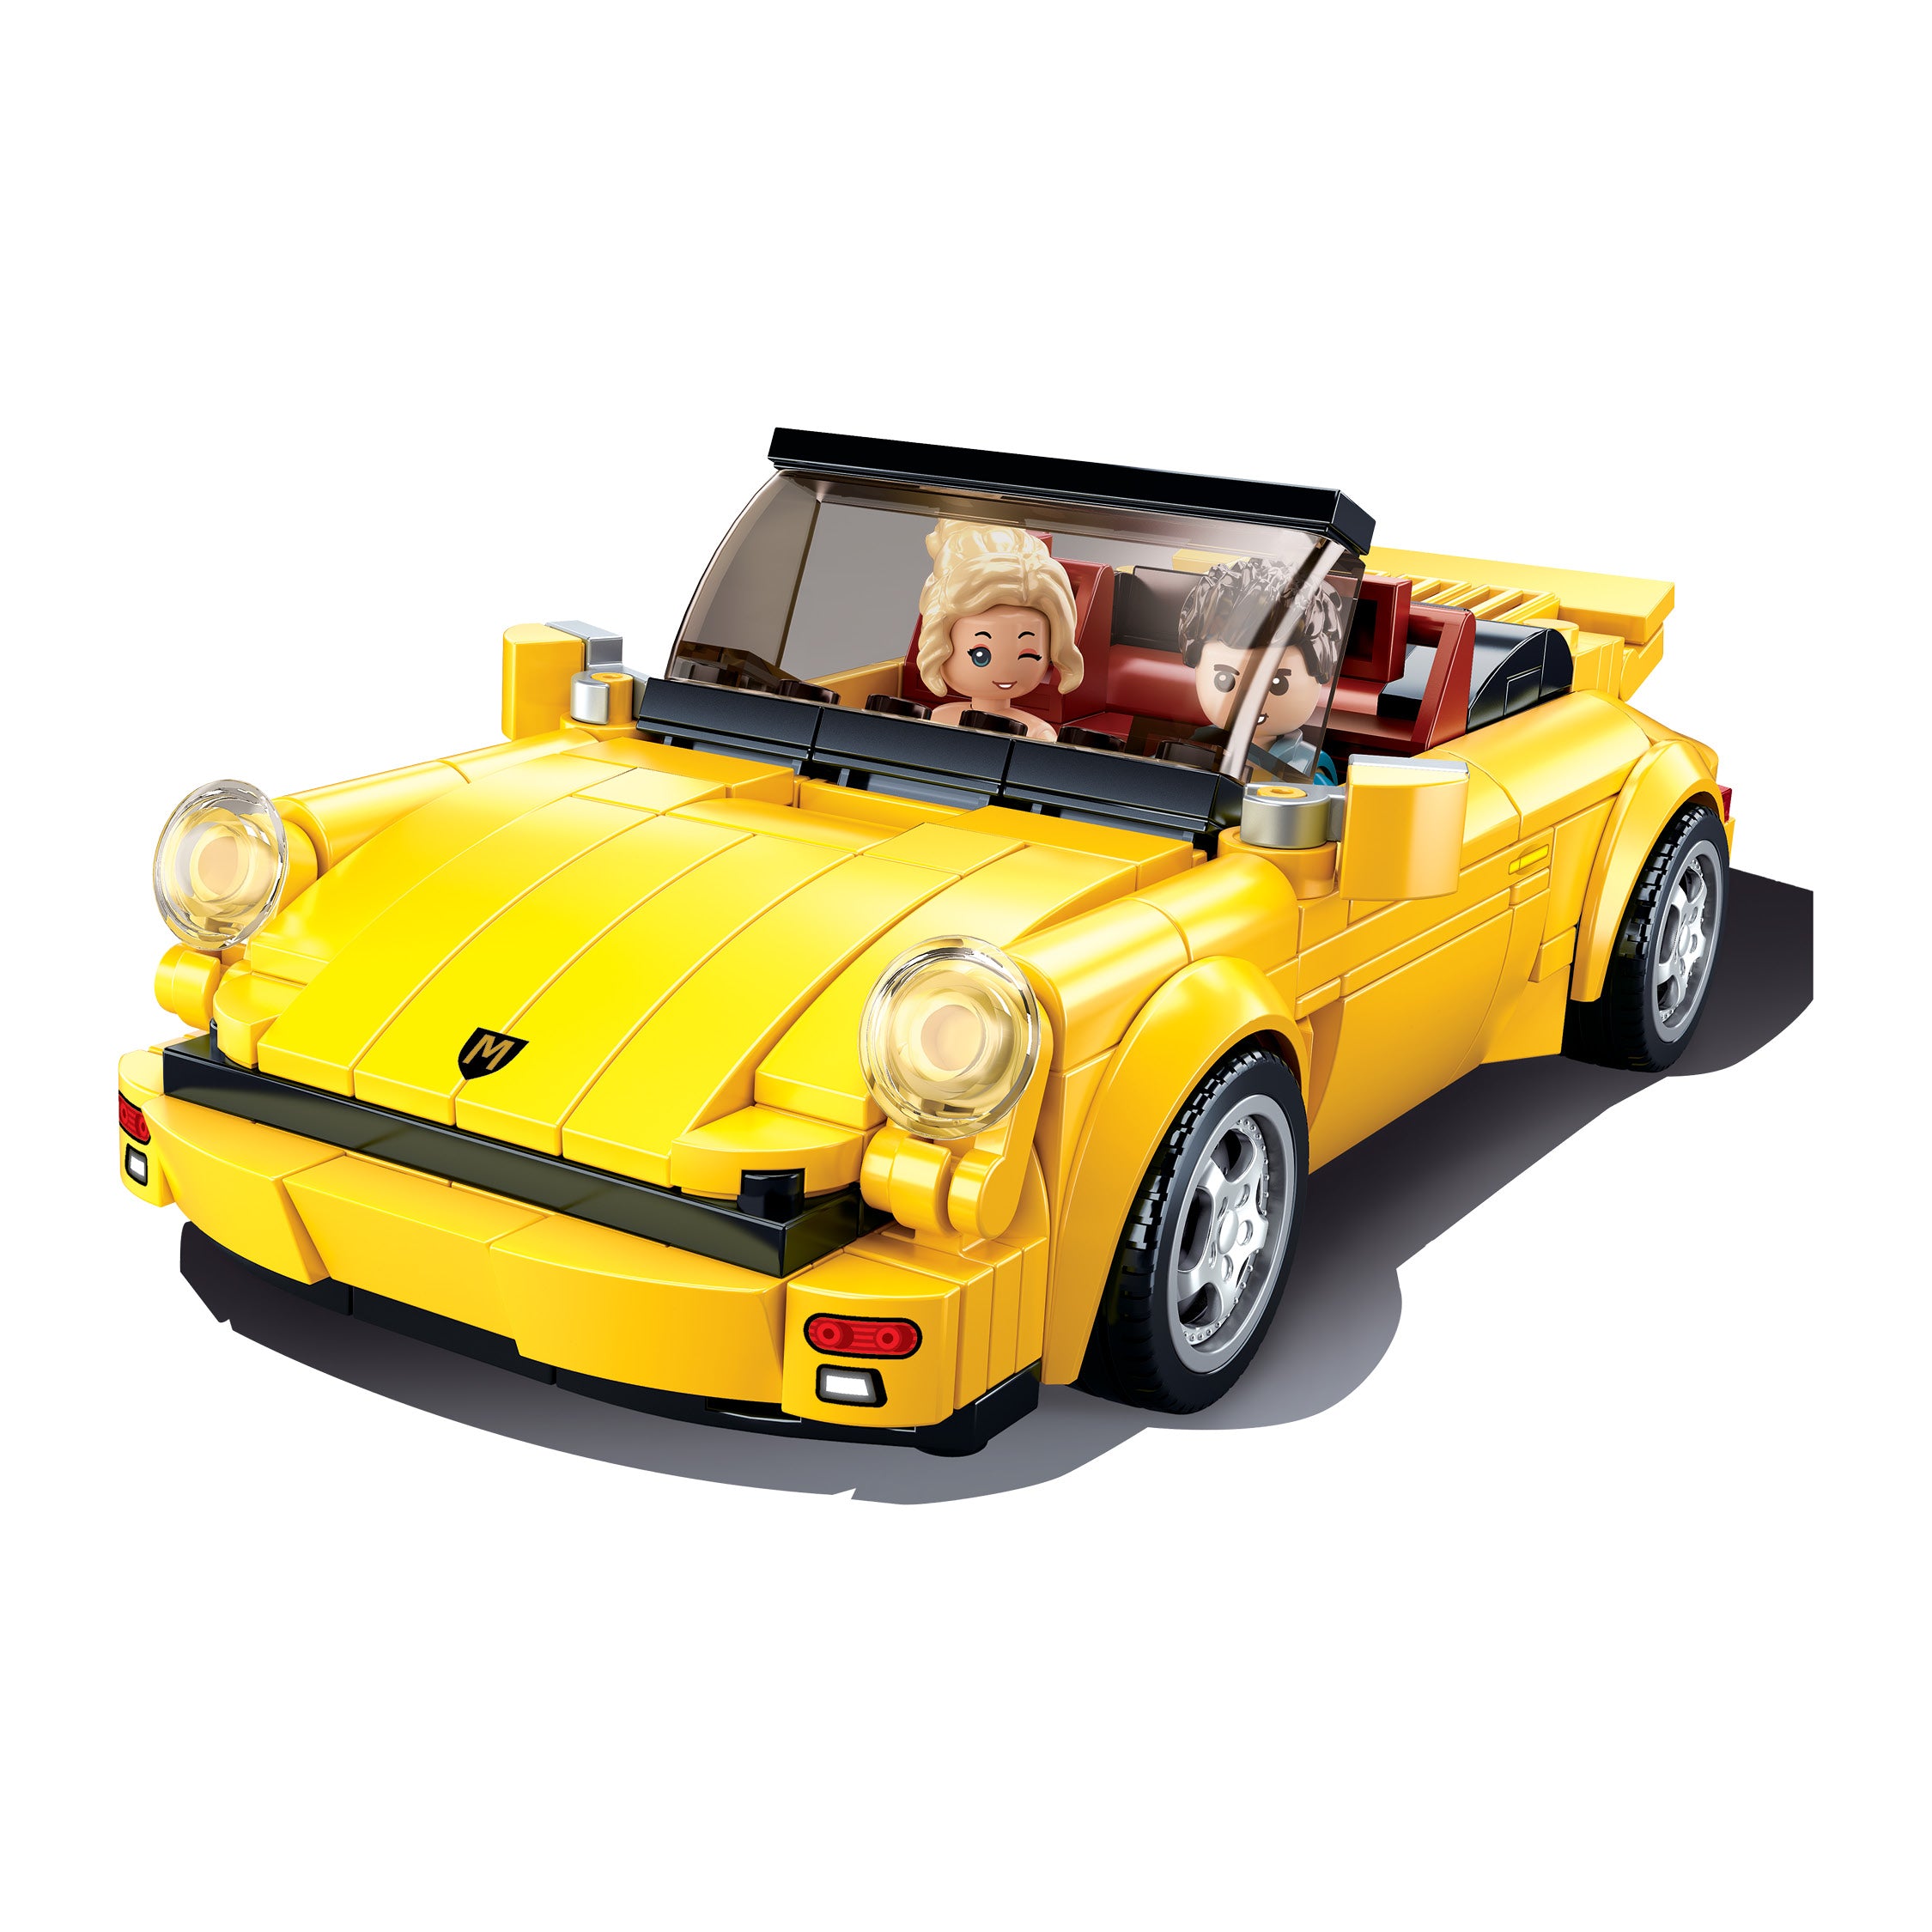 SLUBAN® MODELBRICKS-930 Sport Car – 290 pcs (M38-B1097) Building Blocks Kit For Boys And Girls Aged 8 Years And Above Creative Construction Set Educational STEM Toy